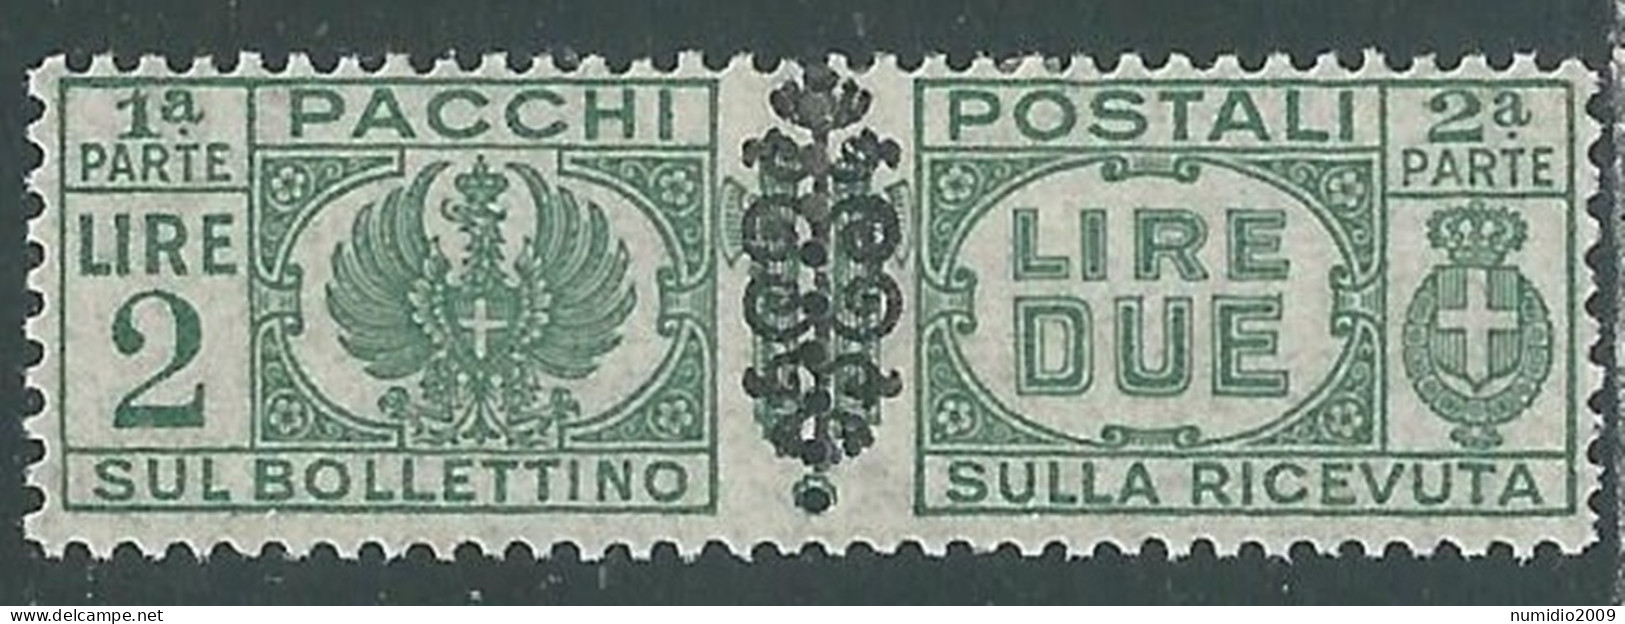 1945 LUOGOTENENZA PACCHI POSTALI 2 LIRE MH * - I18-6 - Postal Parcels